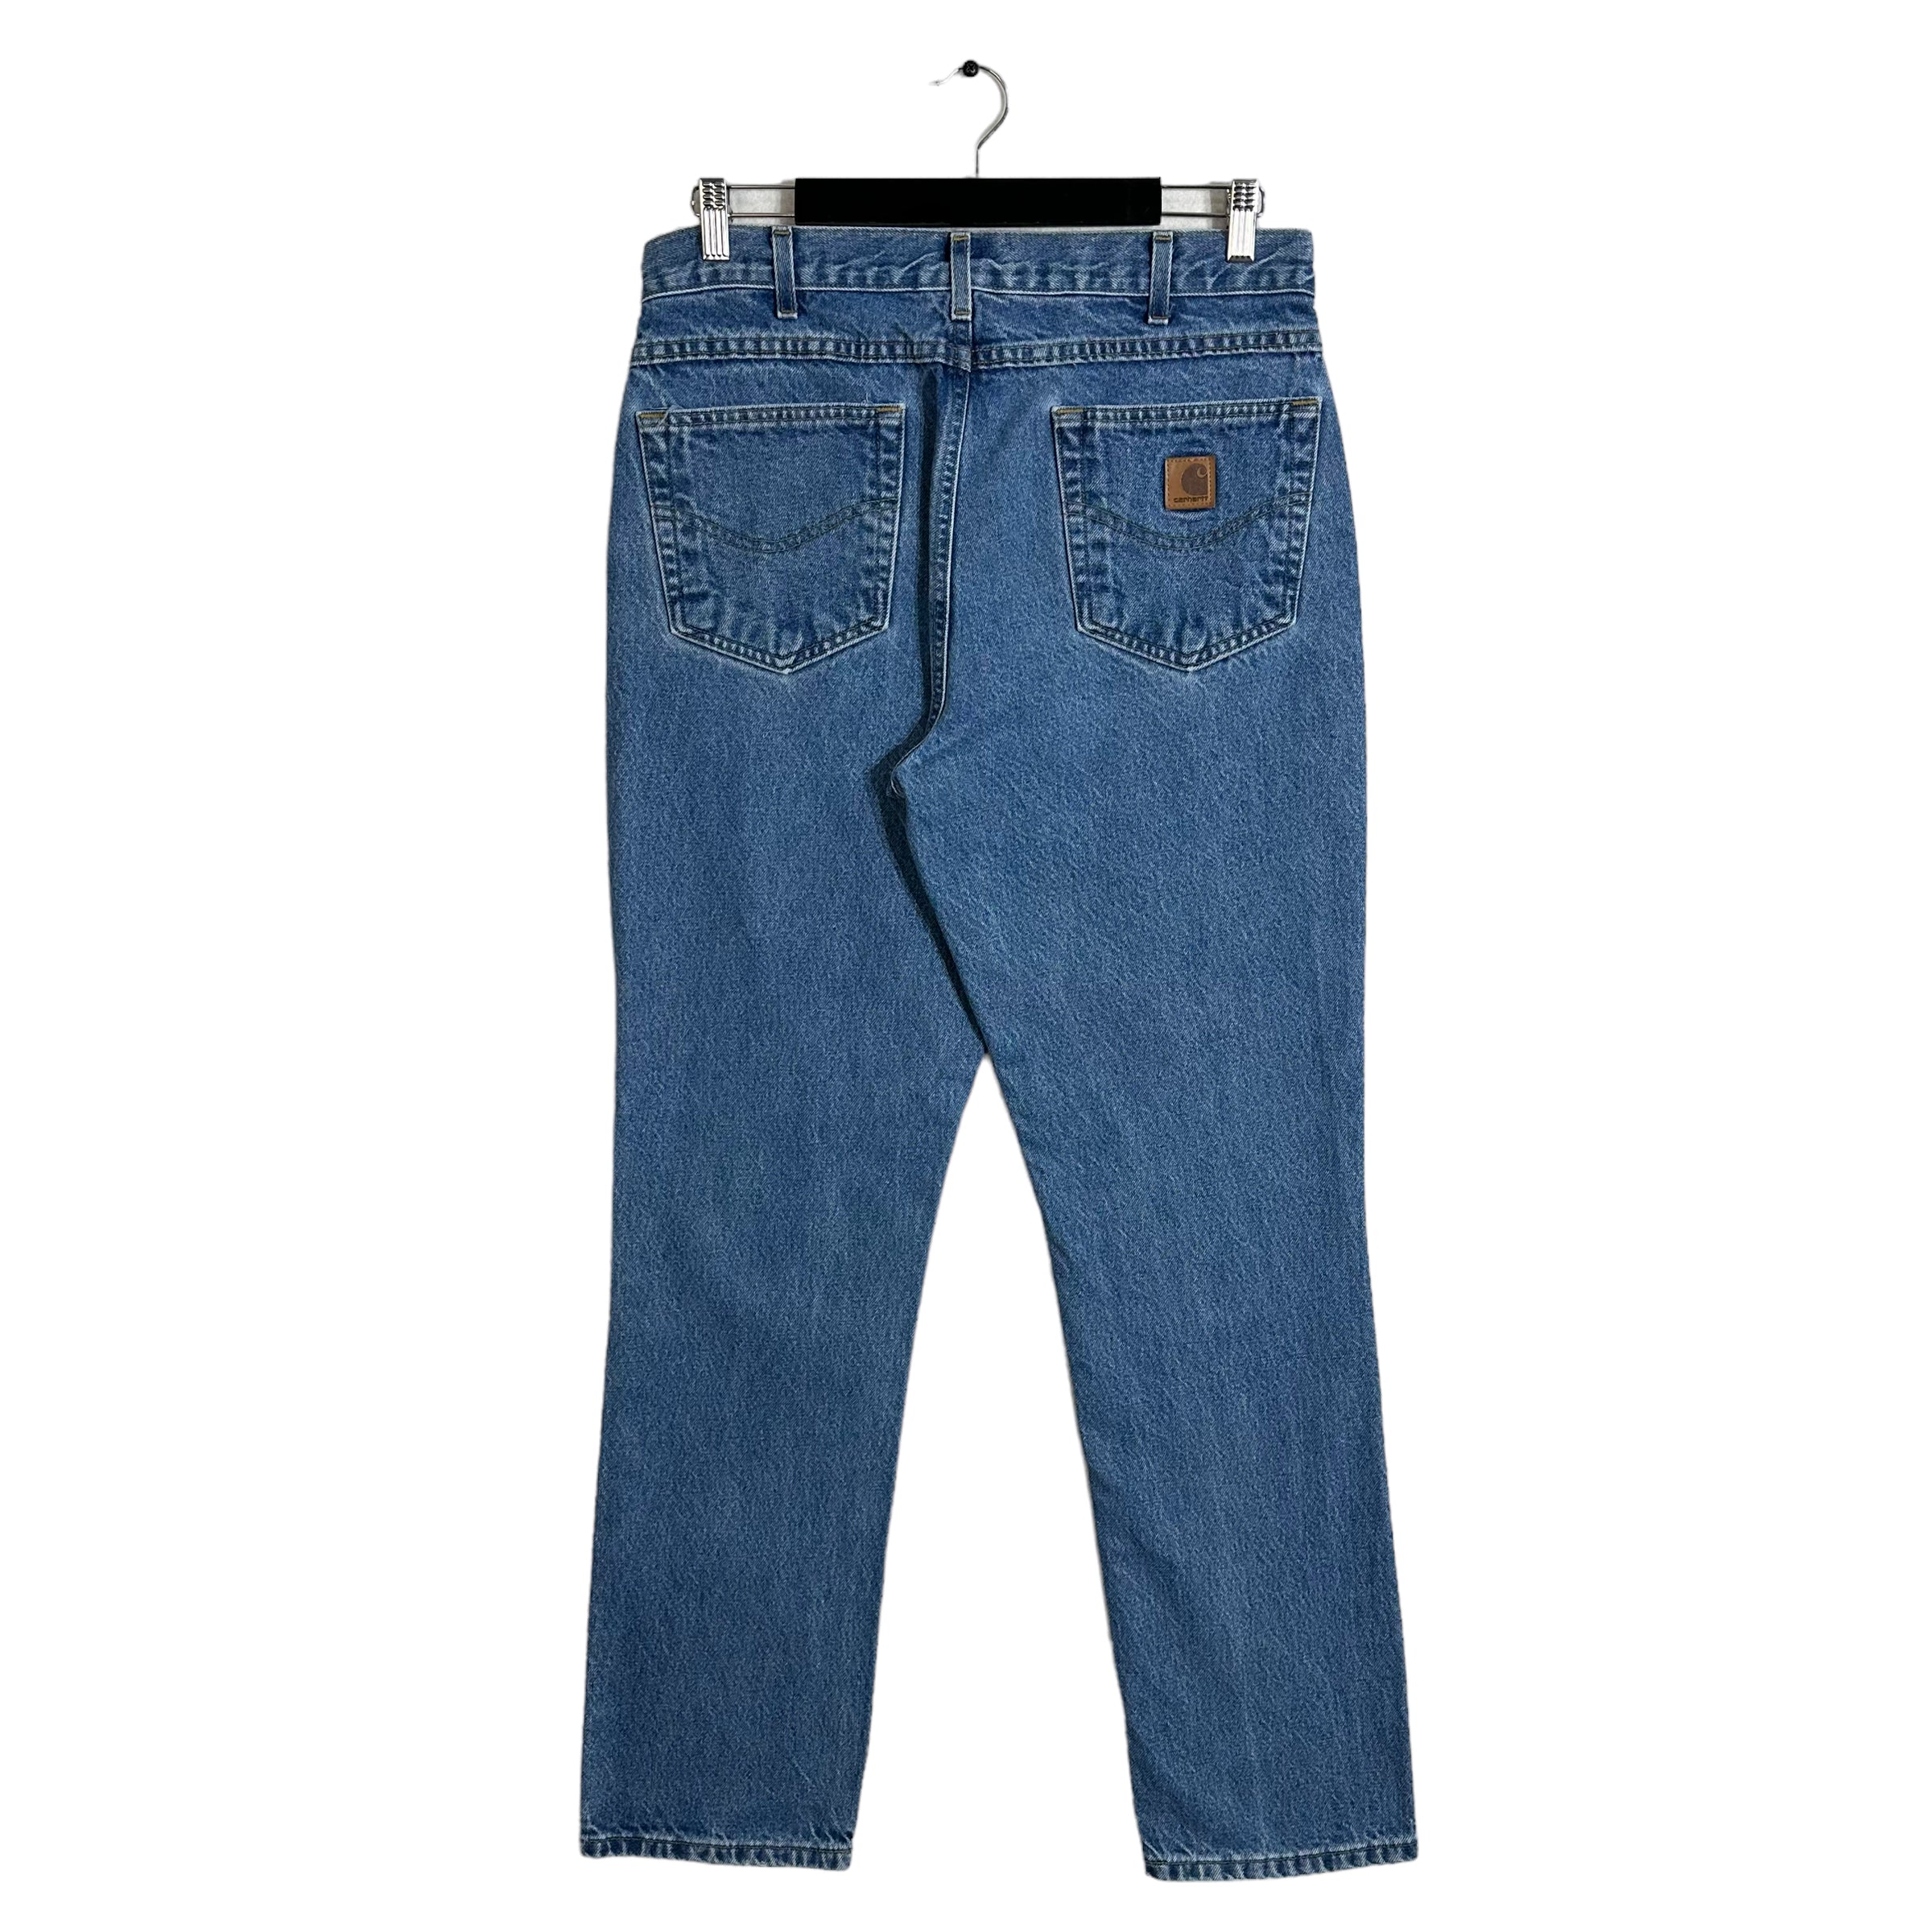 Vintage Carhartt Medium Wash Straight Leg Denim jeans